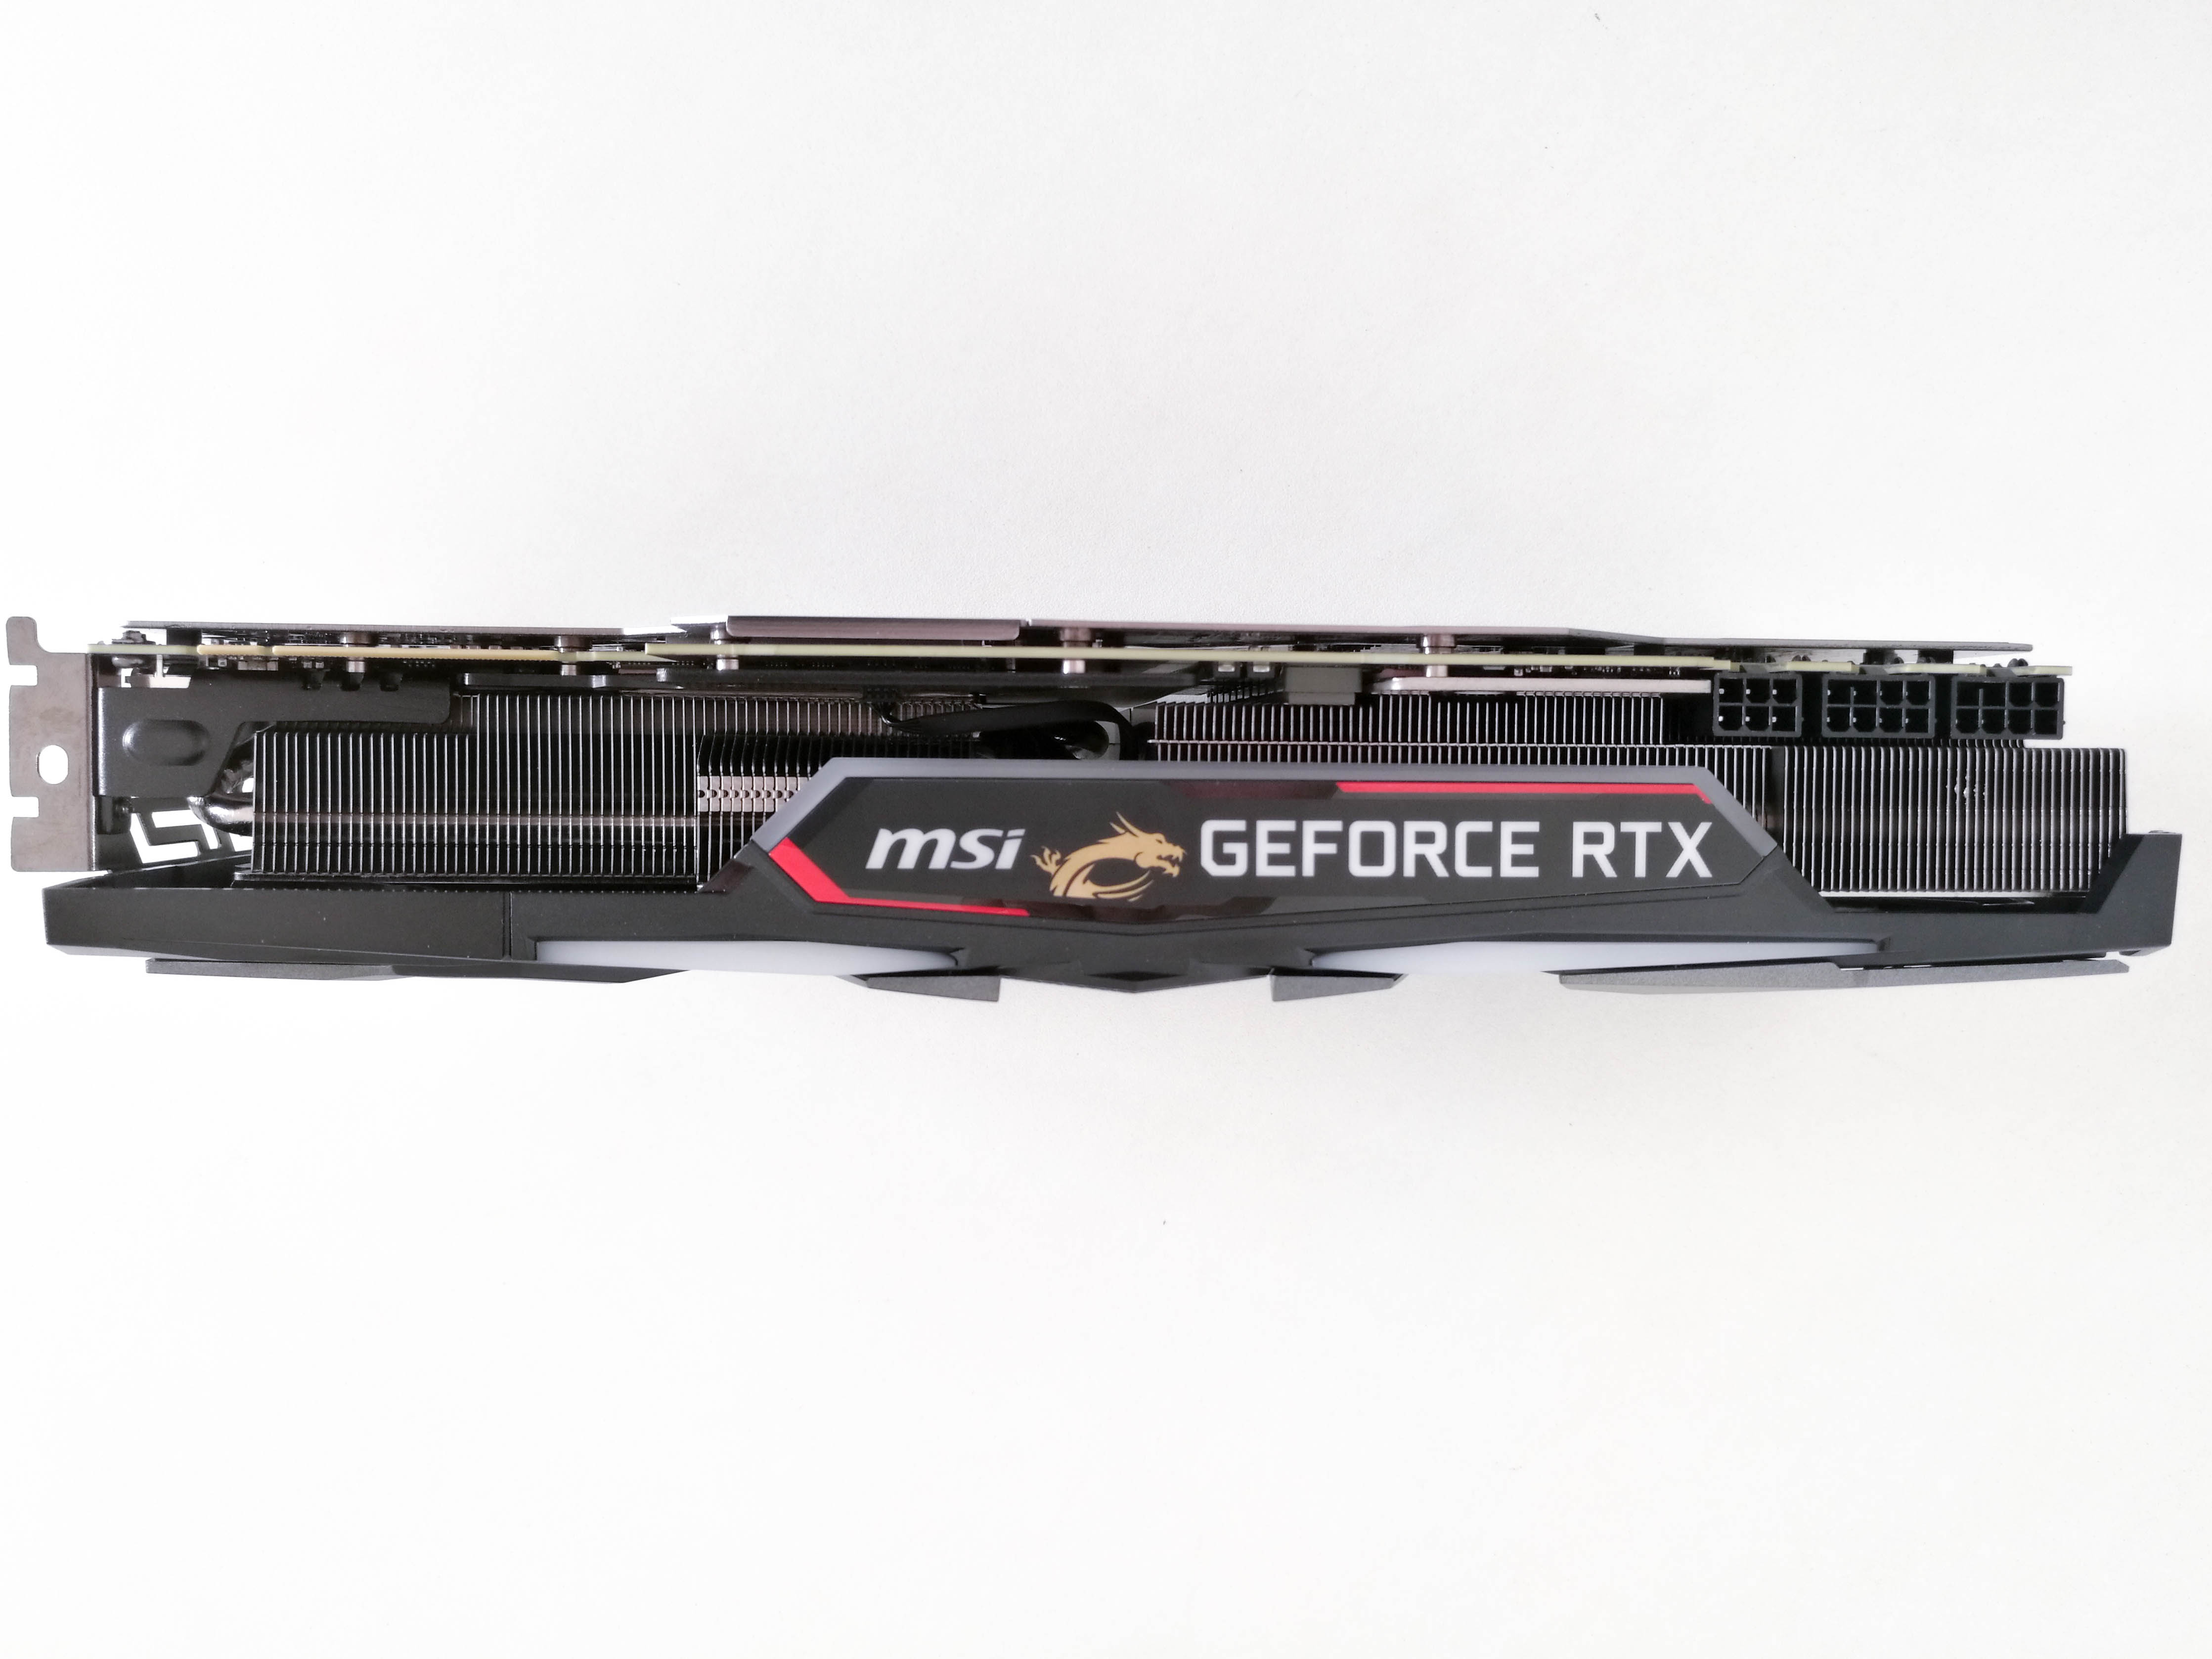 Image 6 : Photos : la GeForce RTX 2080 Ti Gaming X Trio de MSI en détail